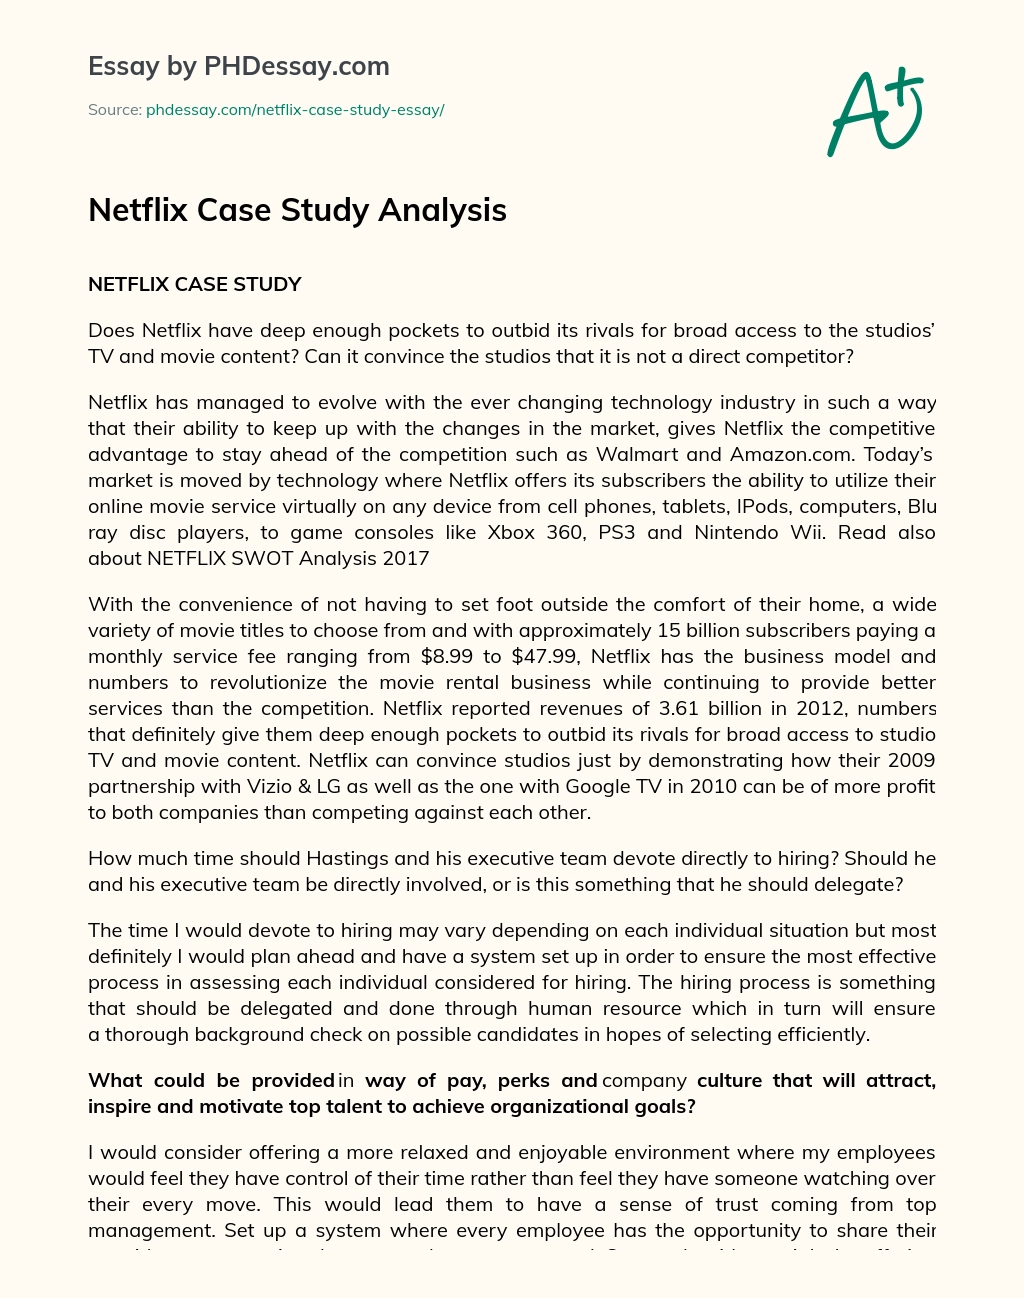 Netflix Case Study Analysis essay